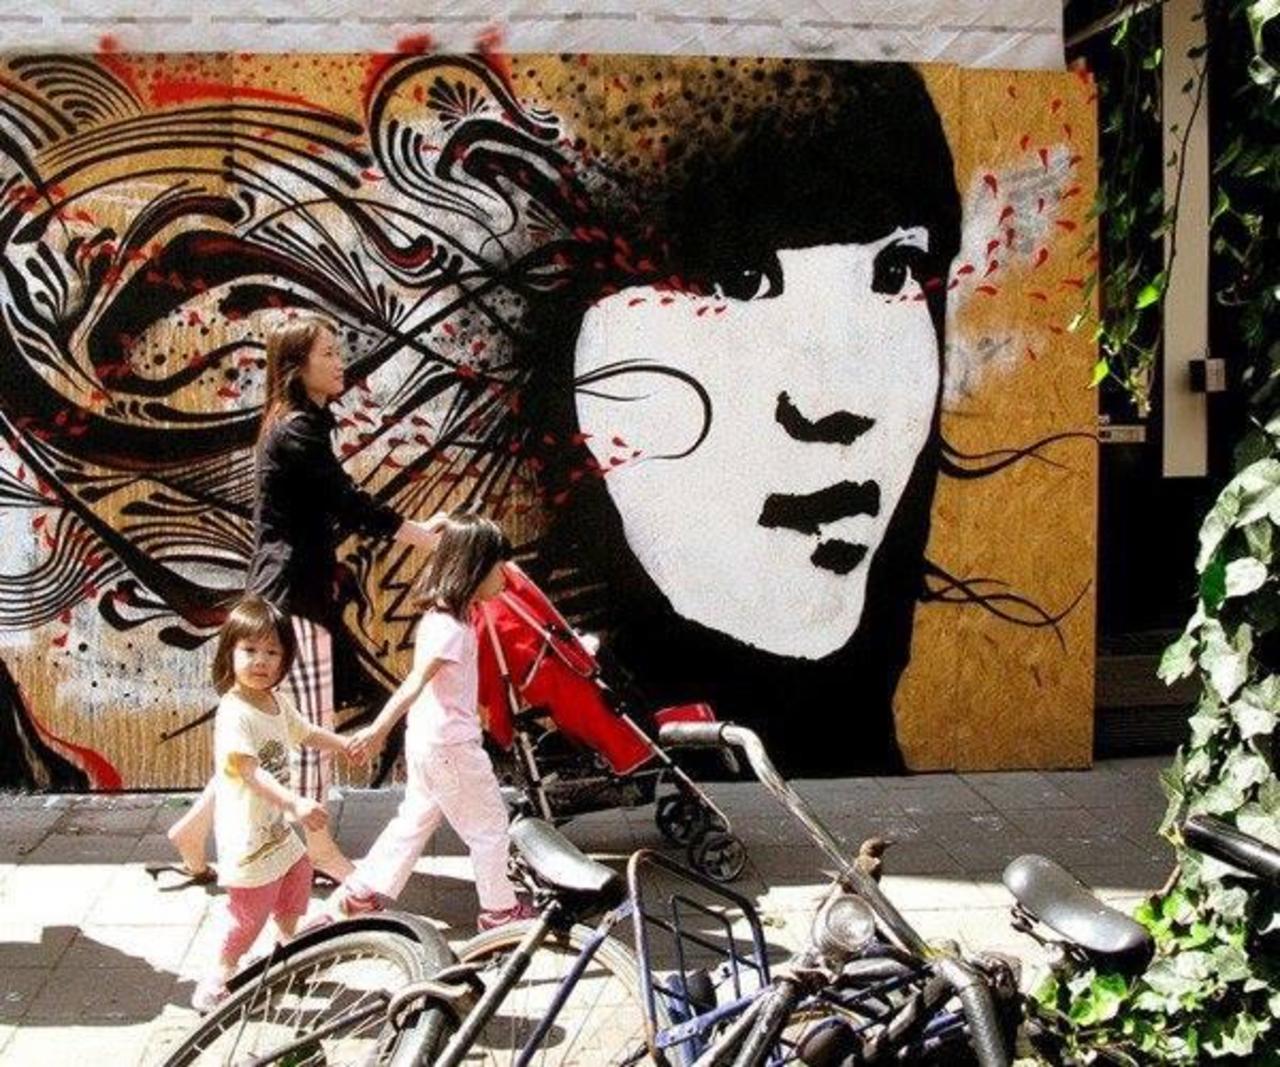 “@Pitchuskita: STINKFISH 
#streetart #art #graffiti #mural http://t.co/tlLuXaR1KY”